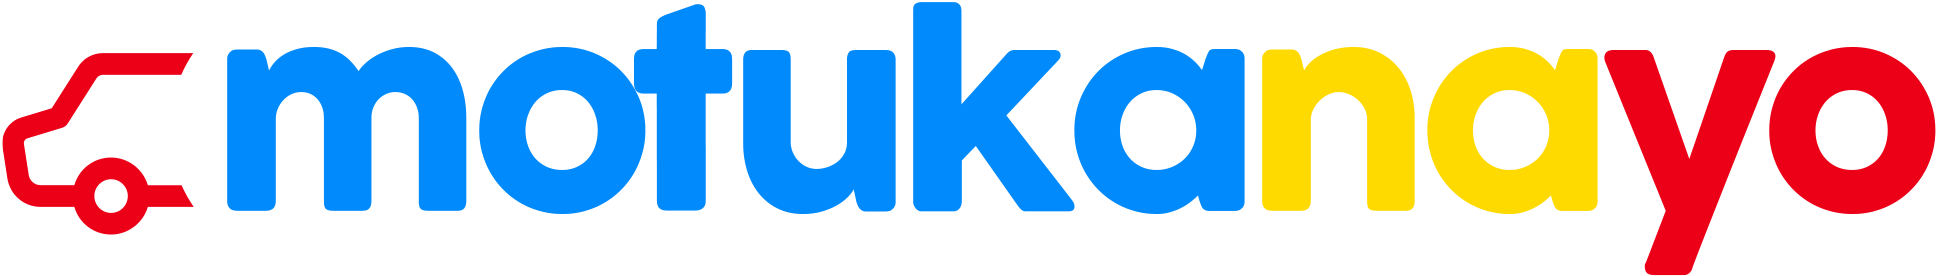 Motukanayo logo